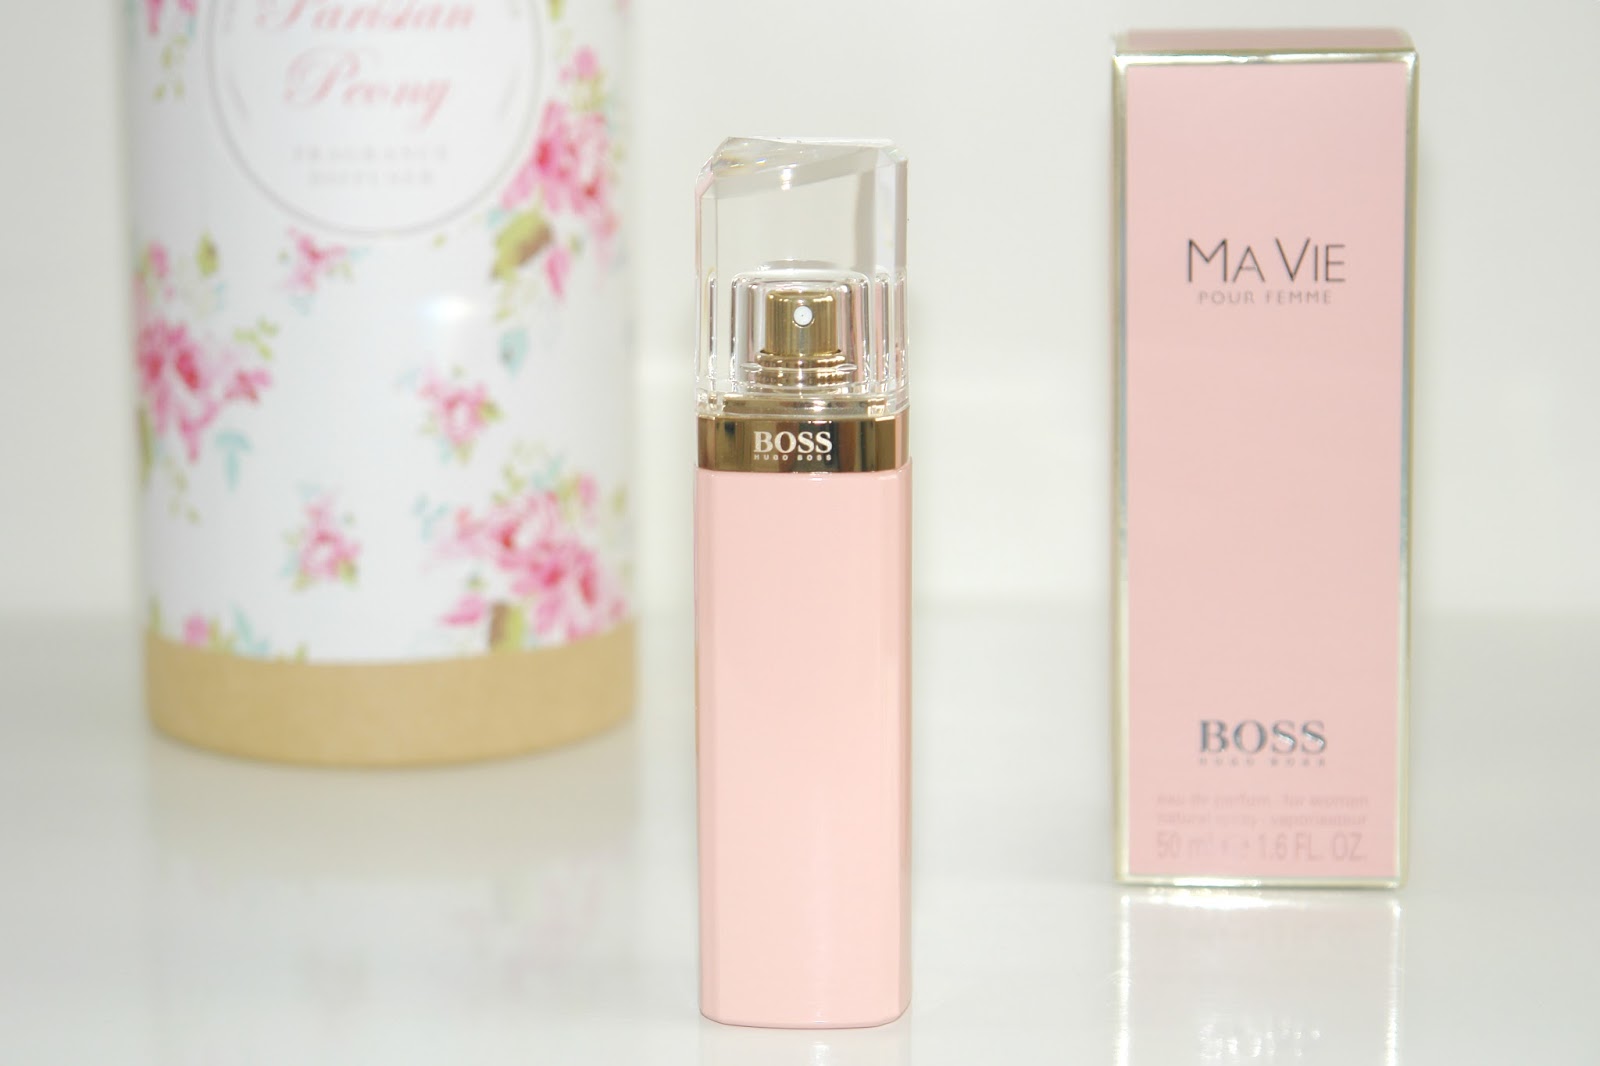 hugo boss mavie perfume review